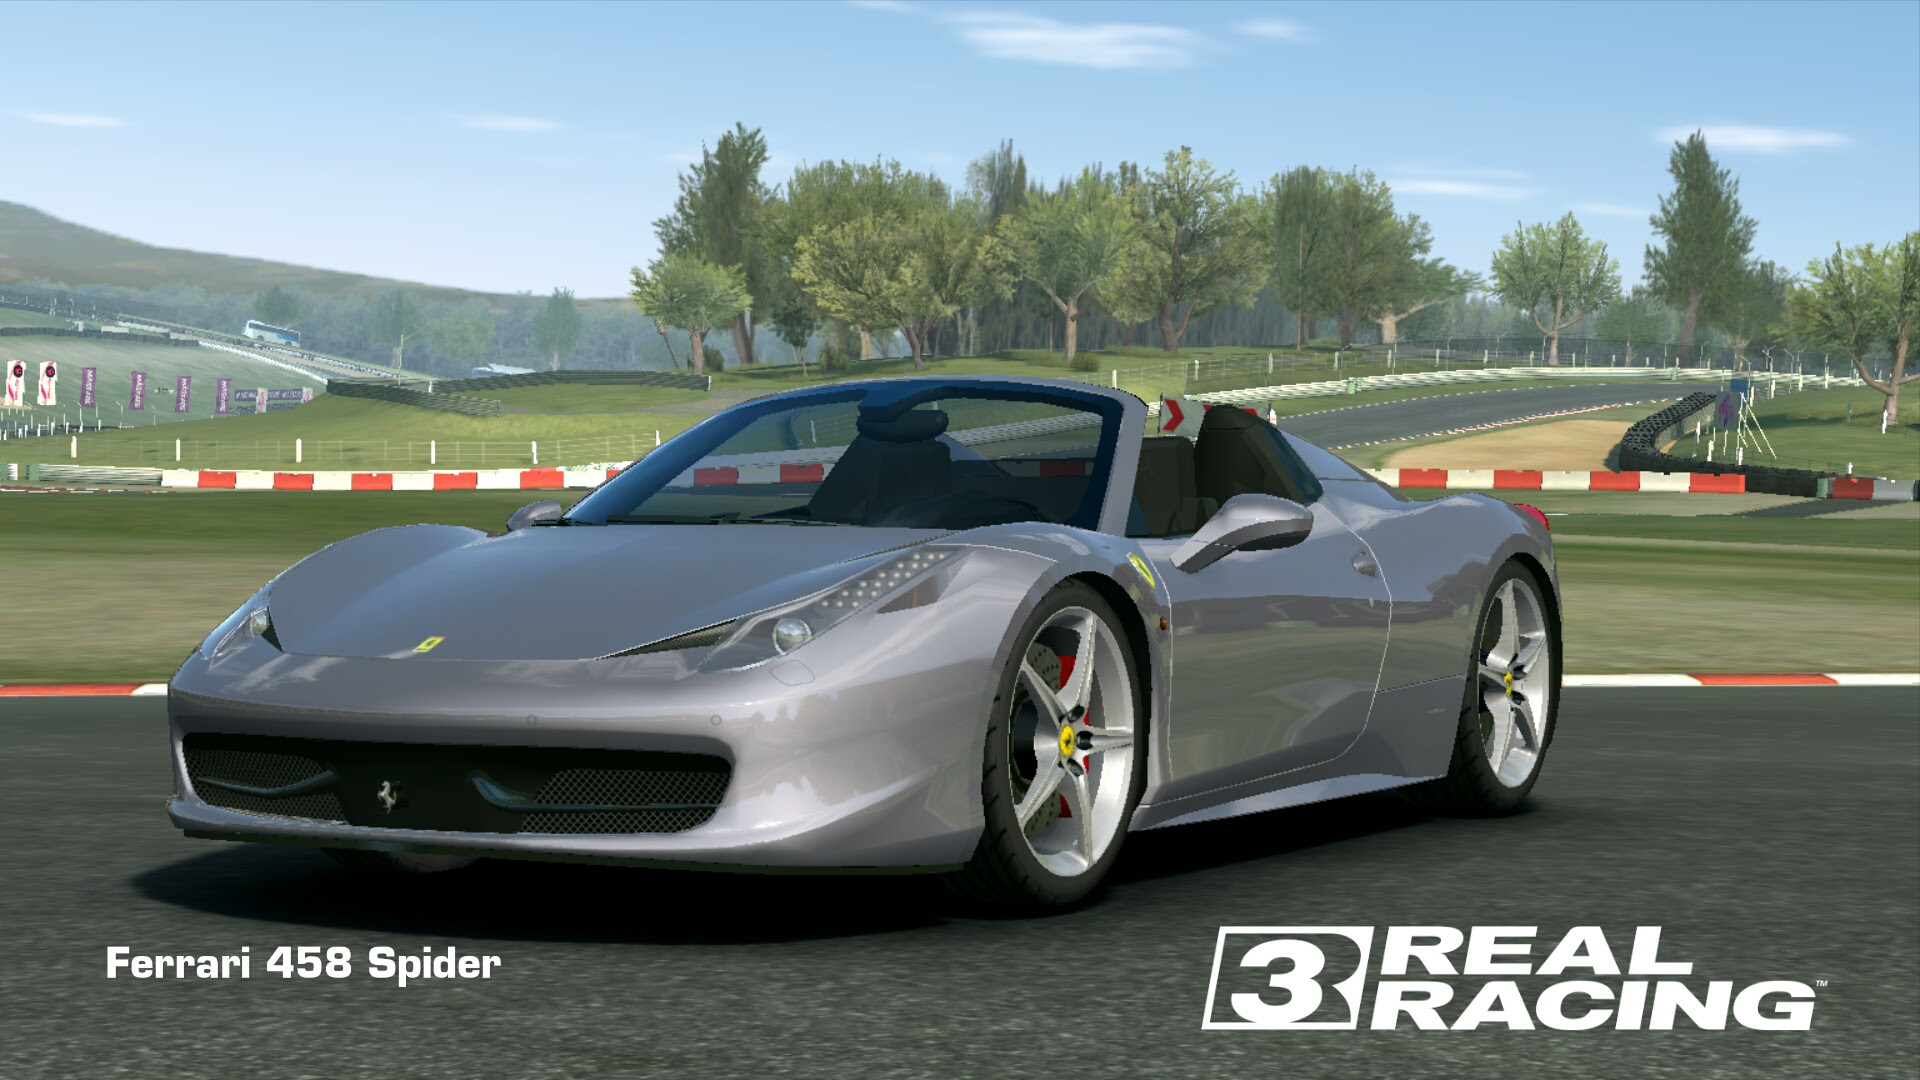 Super Car Thrustmaster Ferrari 458 Spider Racing Wheel For Xbox One Setup